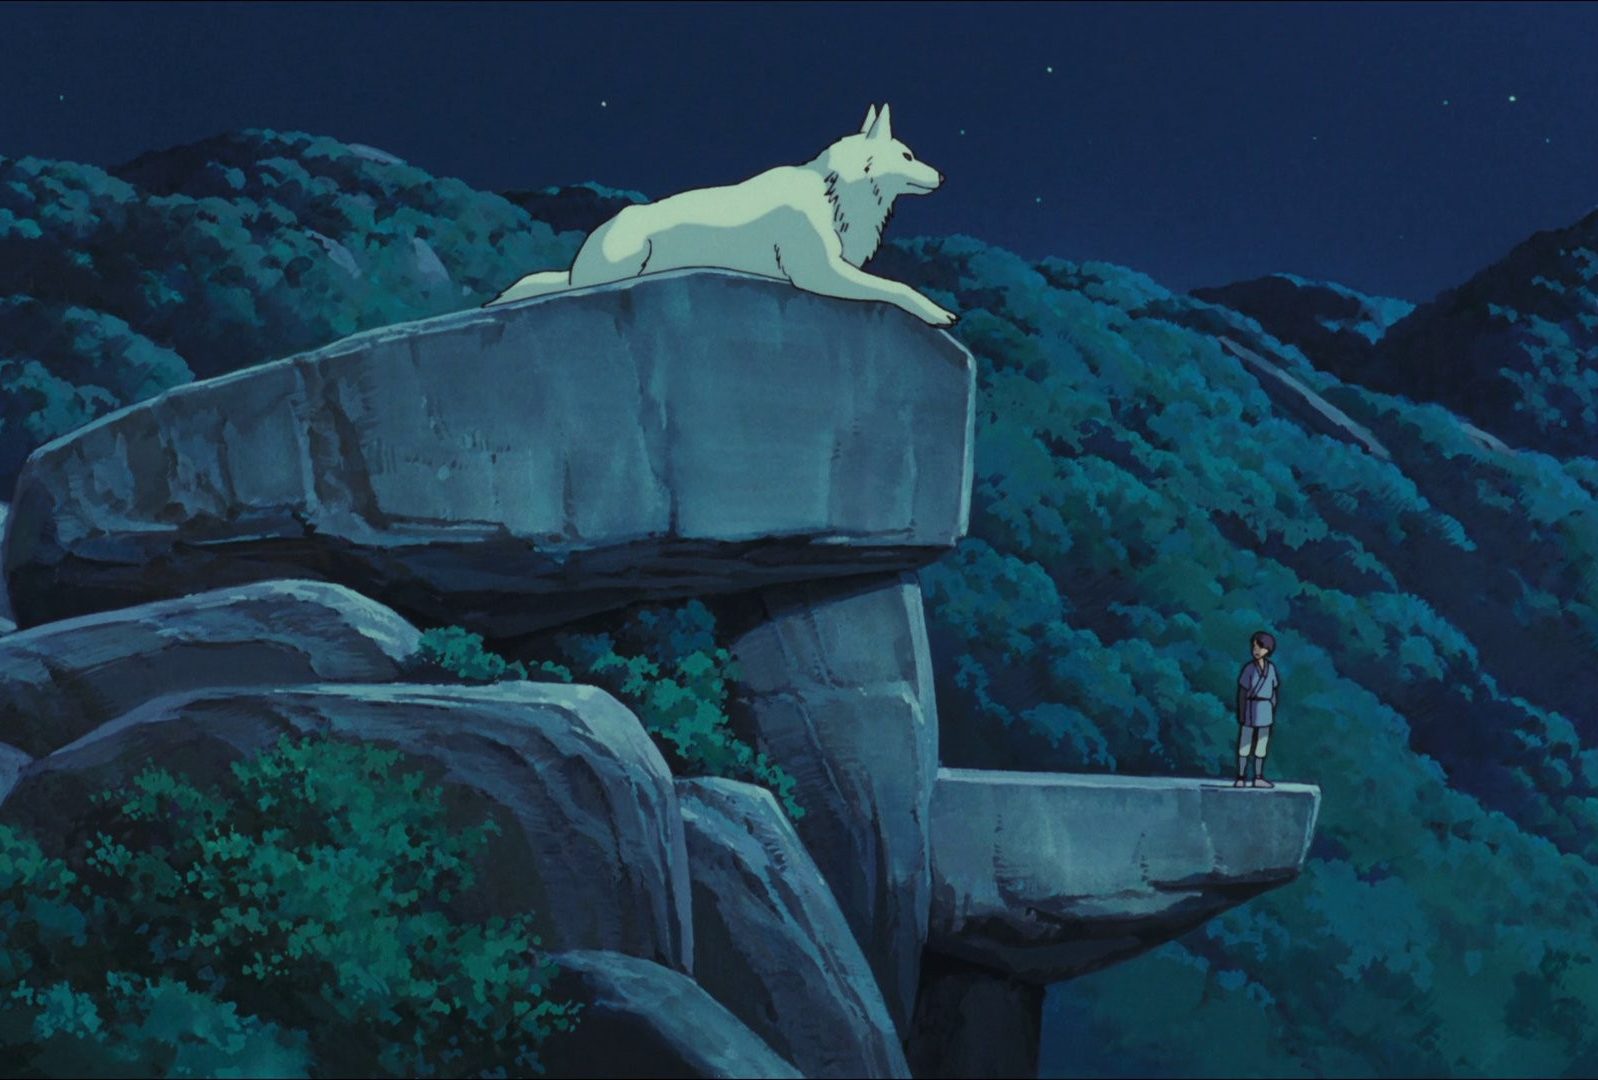 The score to Studio Ghibli's 'Princess Mononoke' is being released on